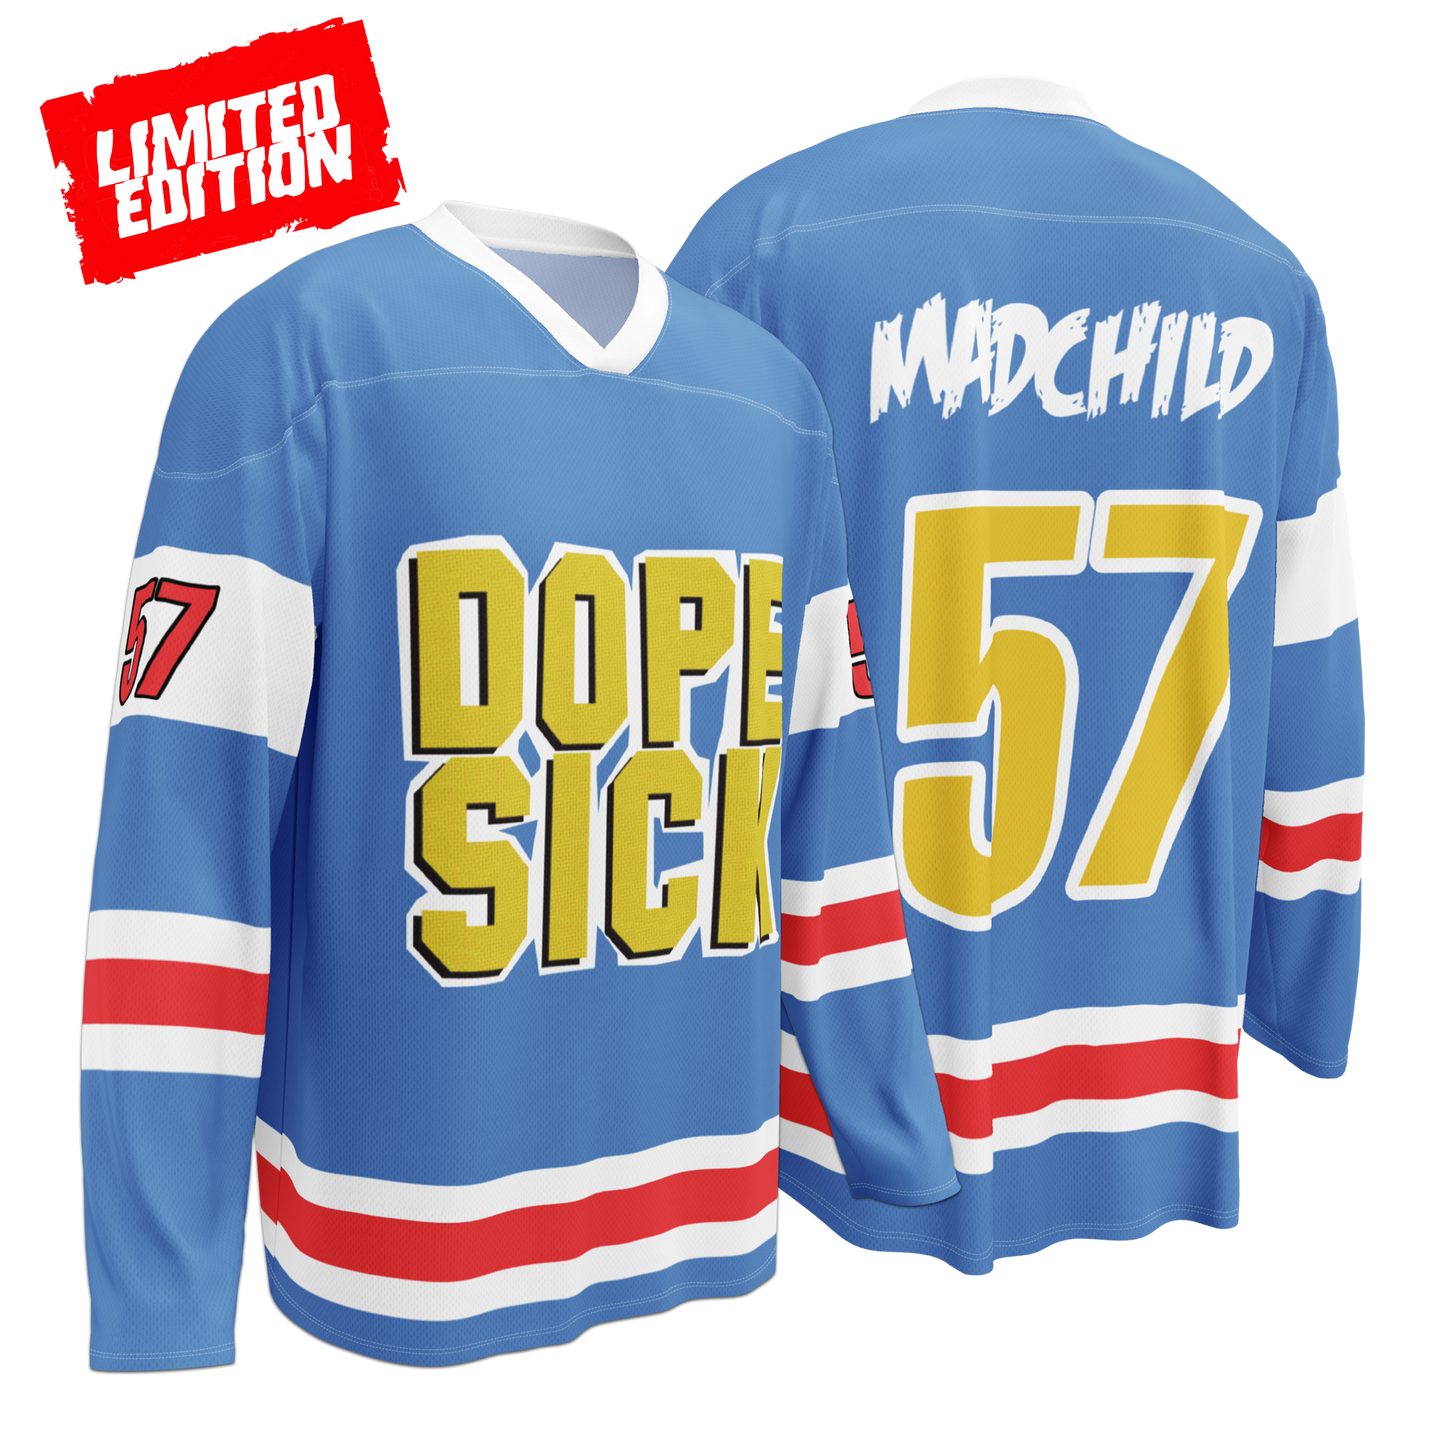 Madchild Dope Sick Blue Jersey [LTD Edition]